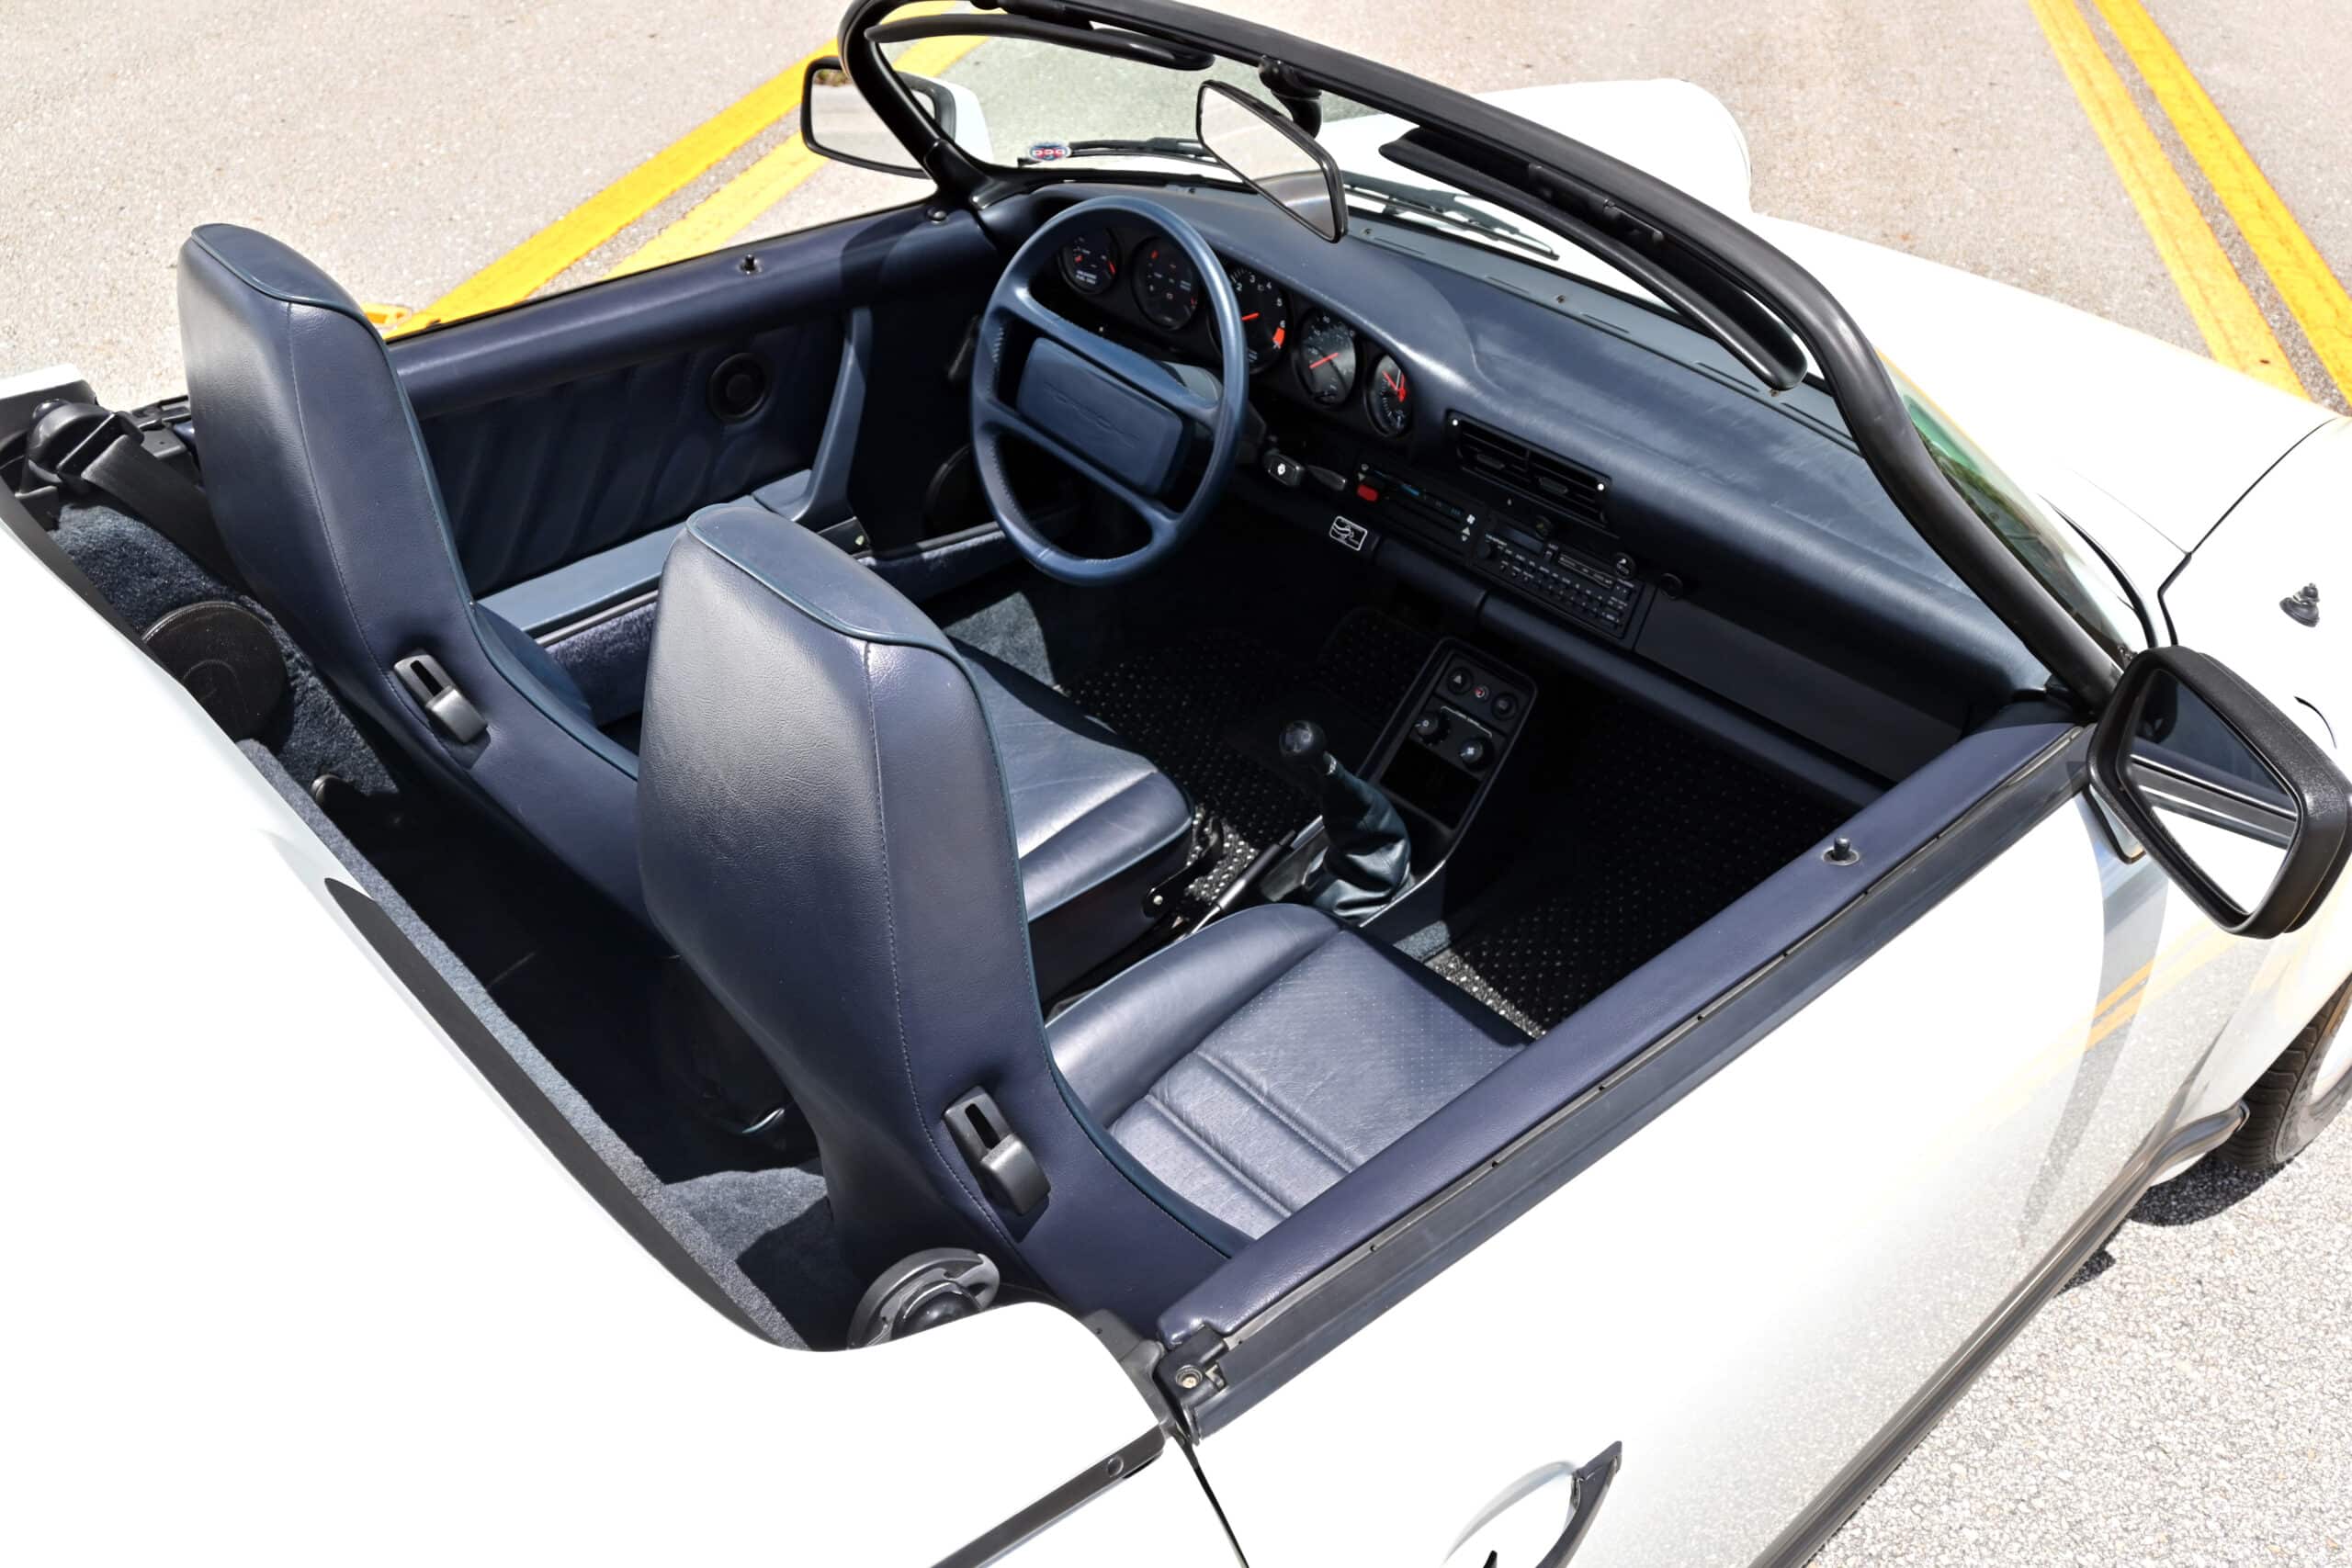 1989 Porsche 911 Speedster / 11K Actual Miles / Outstanding Collector Grade / One of 141 in this configuration / Books Tools Copy of Window Sticker / Original Paint